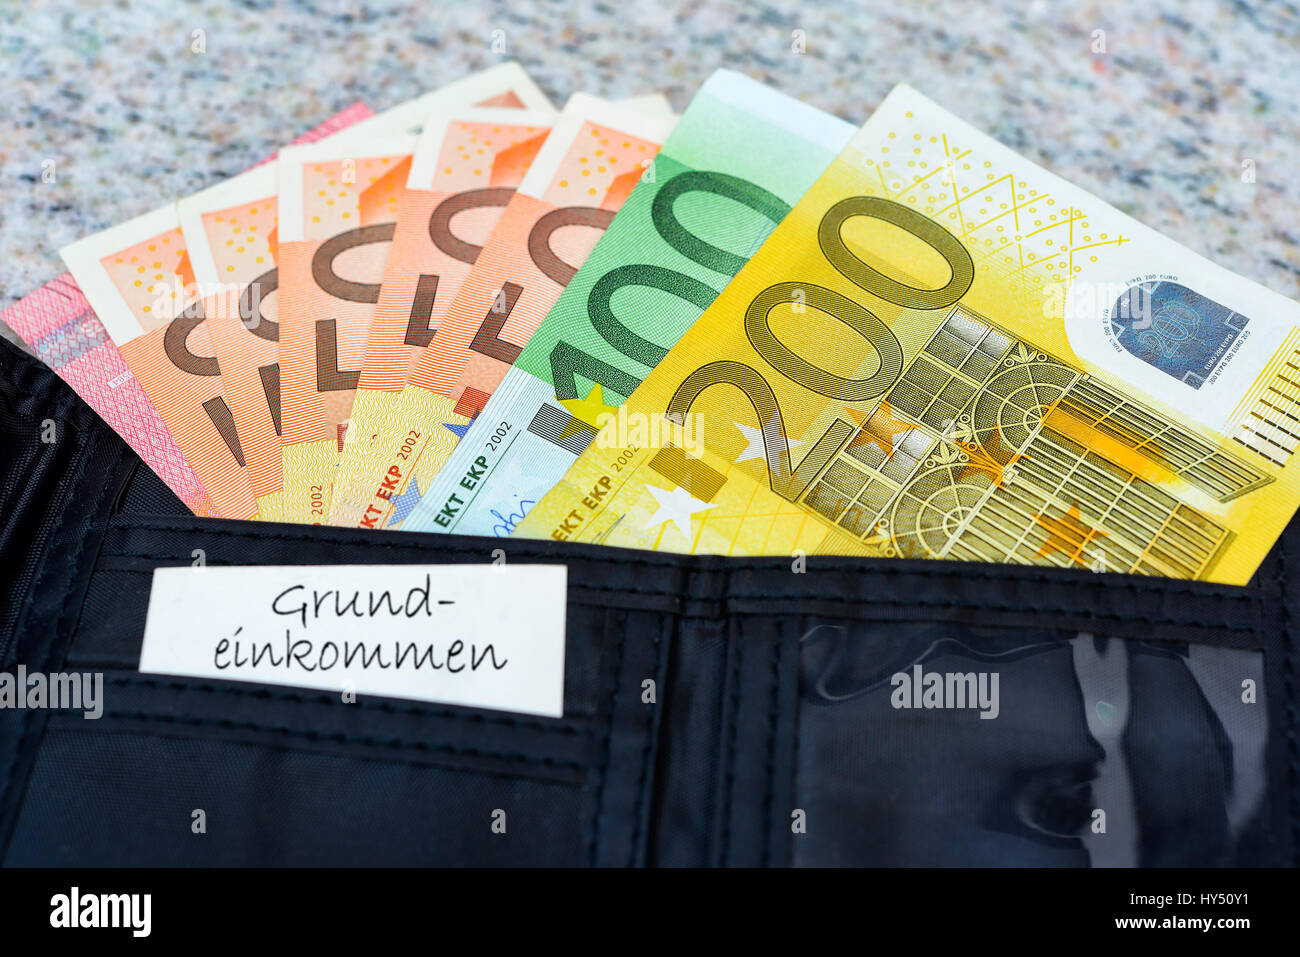 Portamonete con 560 euro di reddito di base, Geldboerse mit 560 Euro Grundeinkommen Foto Stock